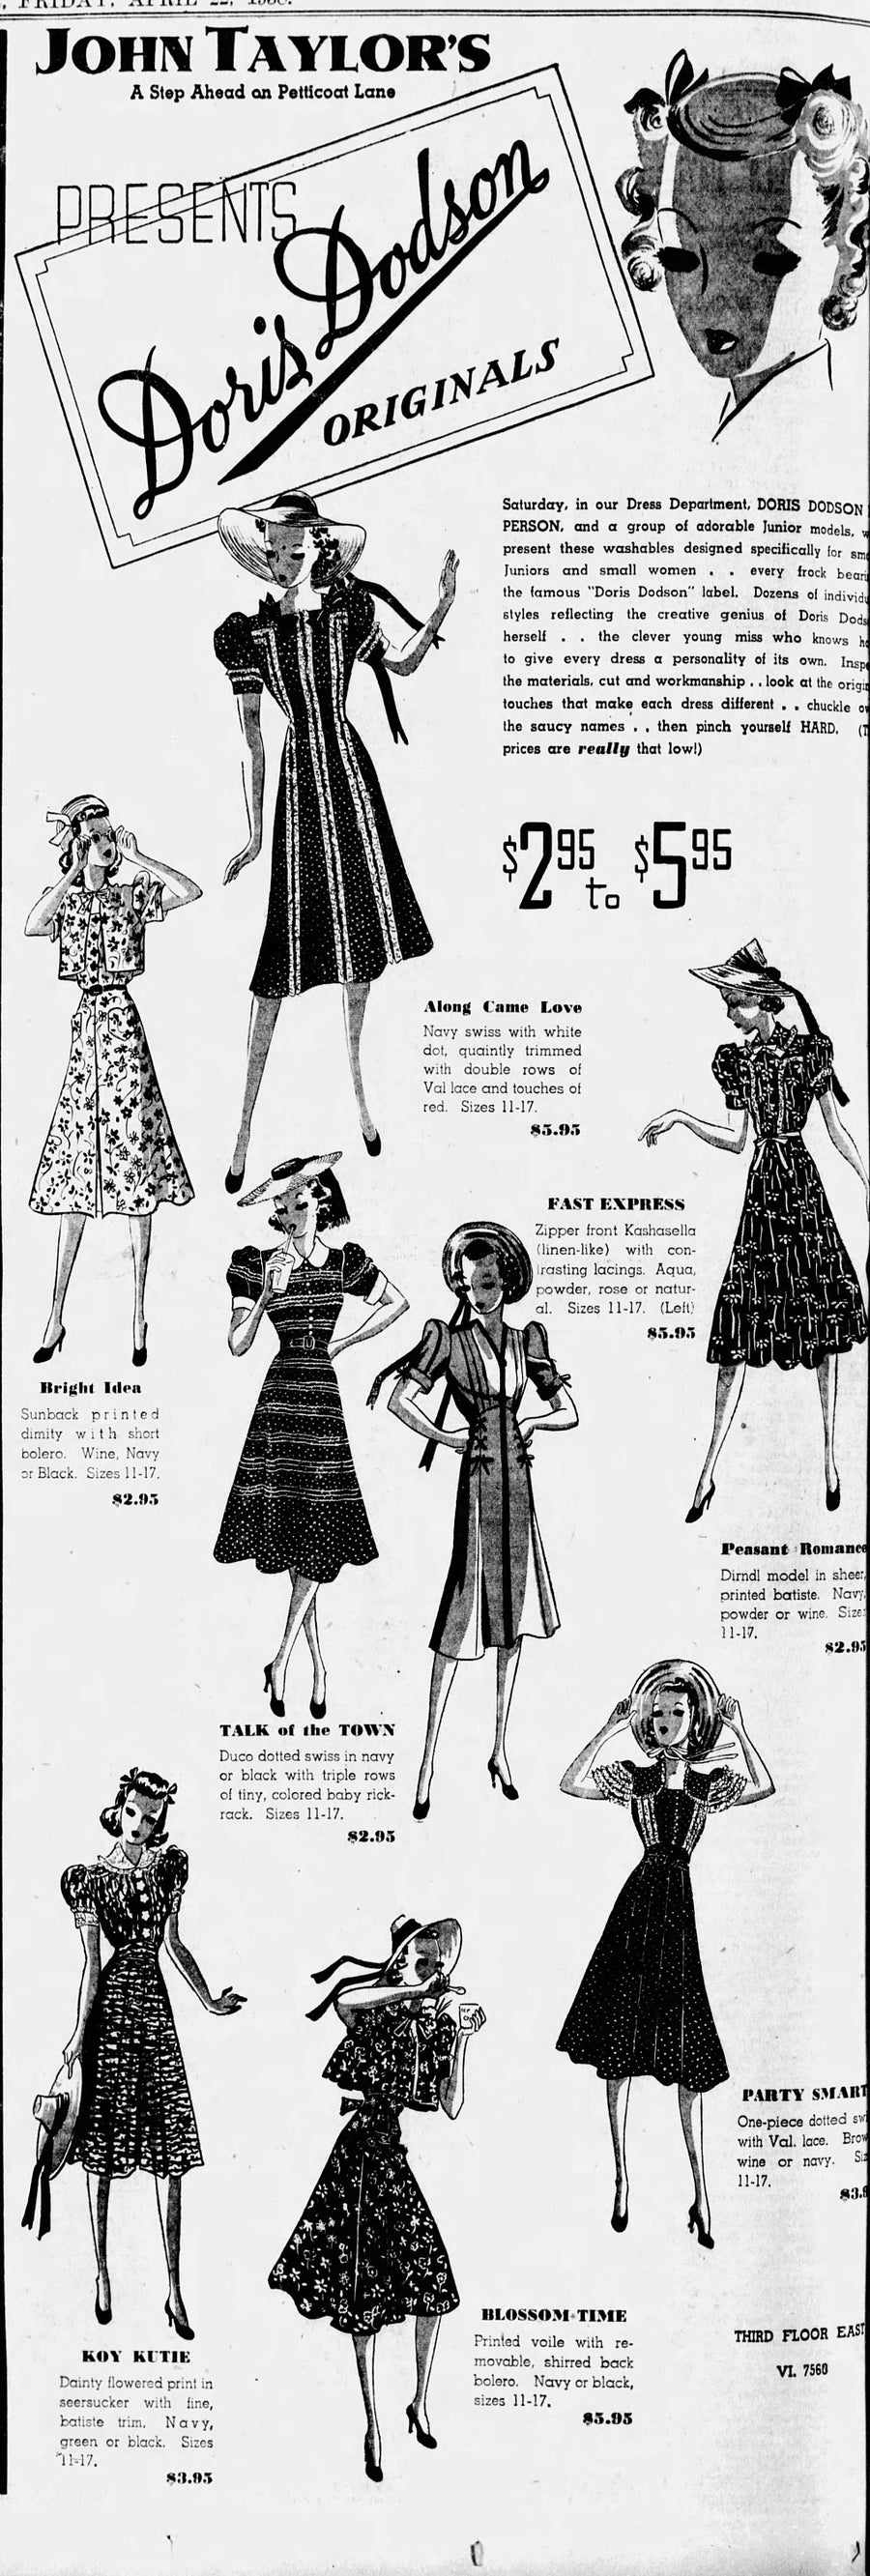 1930s DORIS DODSON swiss dot dress xs | new spring